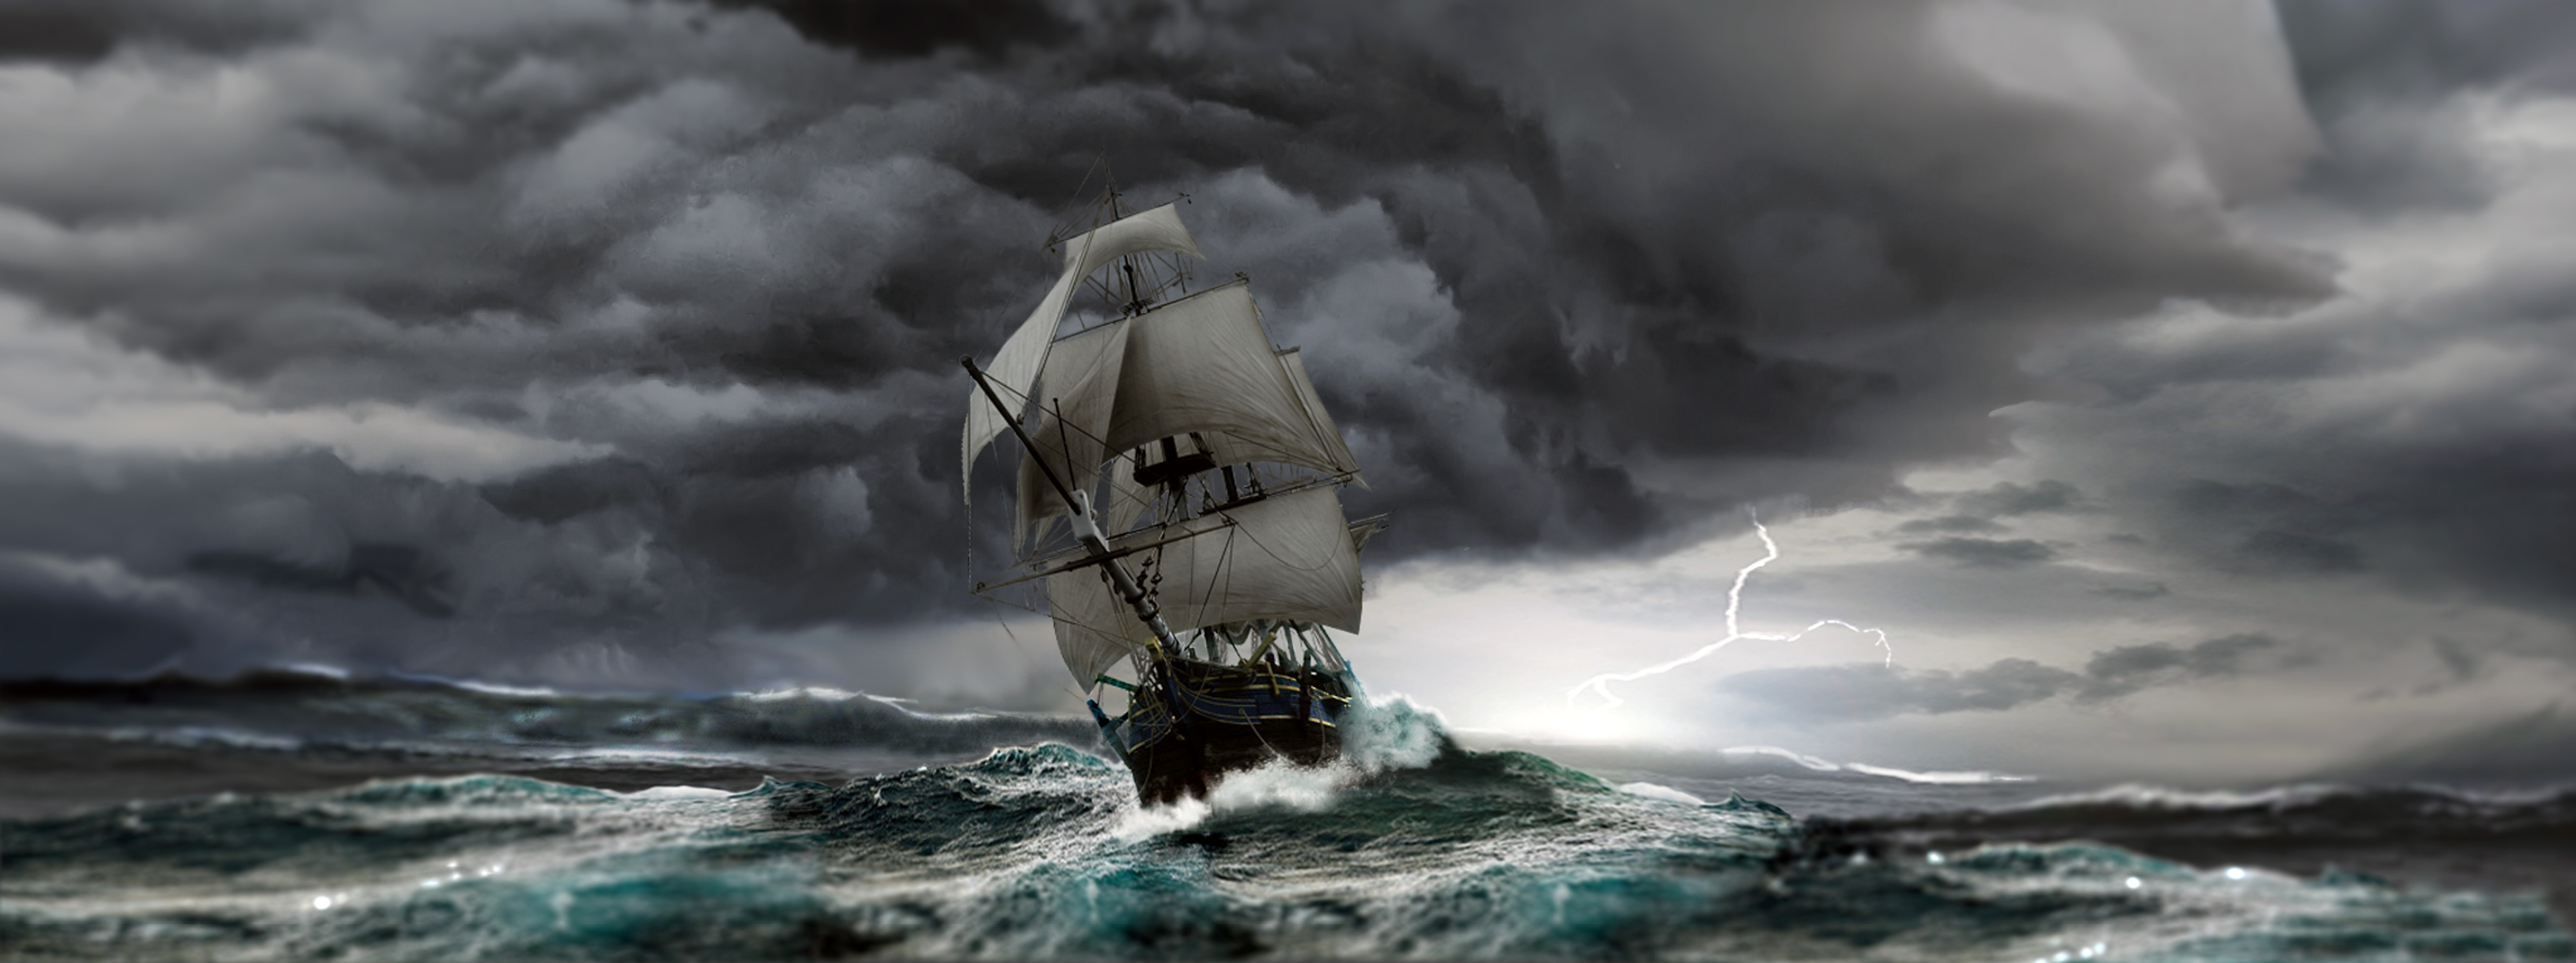 Судно гроза. Корабль в шторм. Парусный корабль в шторм. Море шторм корабль. Бушующее море.